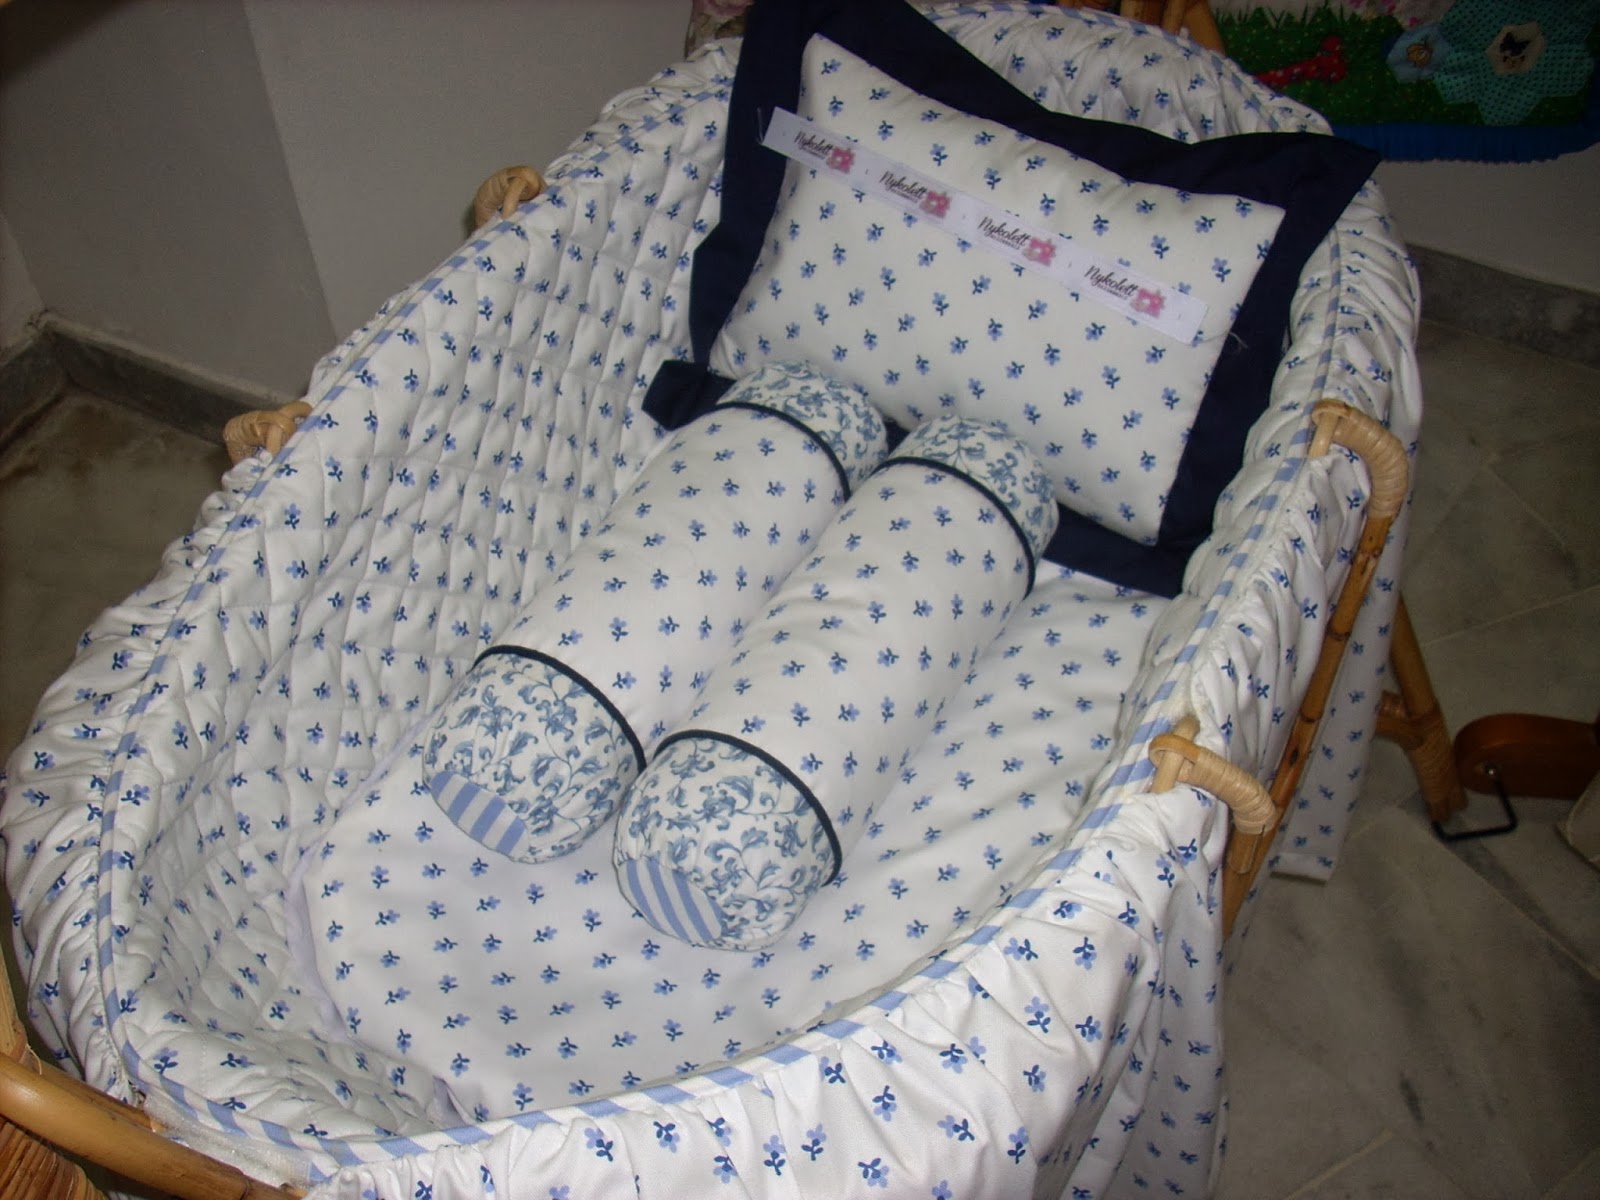 Nykolett Curtains & Soft Furnishing: Tutorial for a baby/toddler bolster..